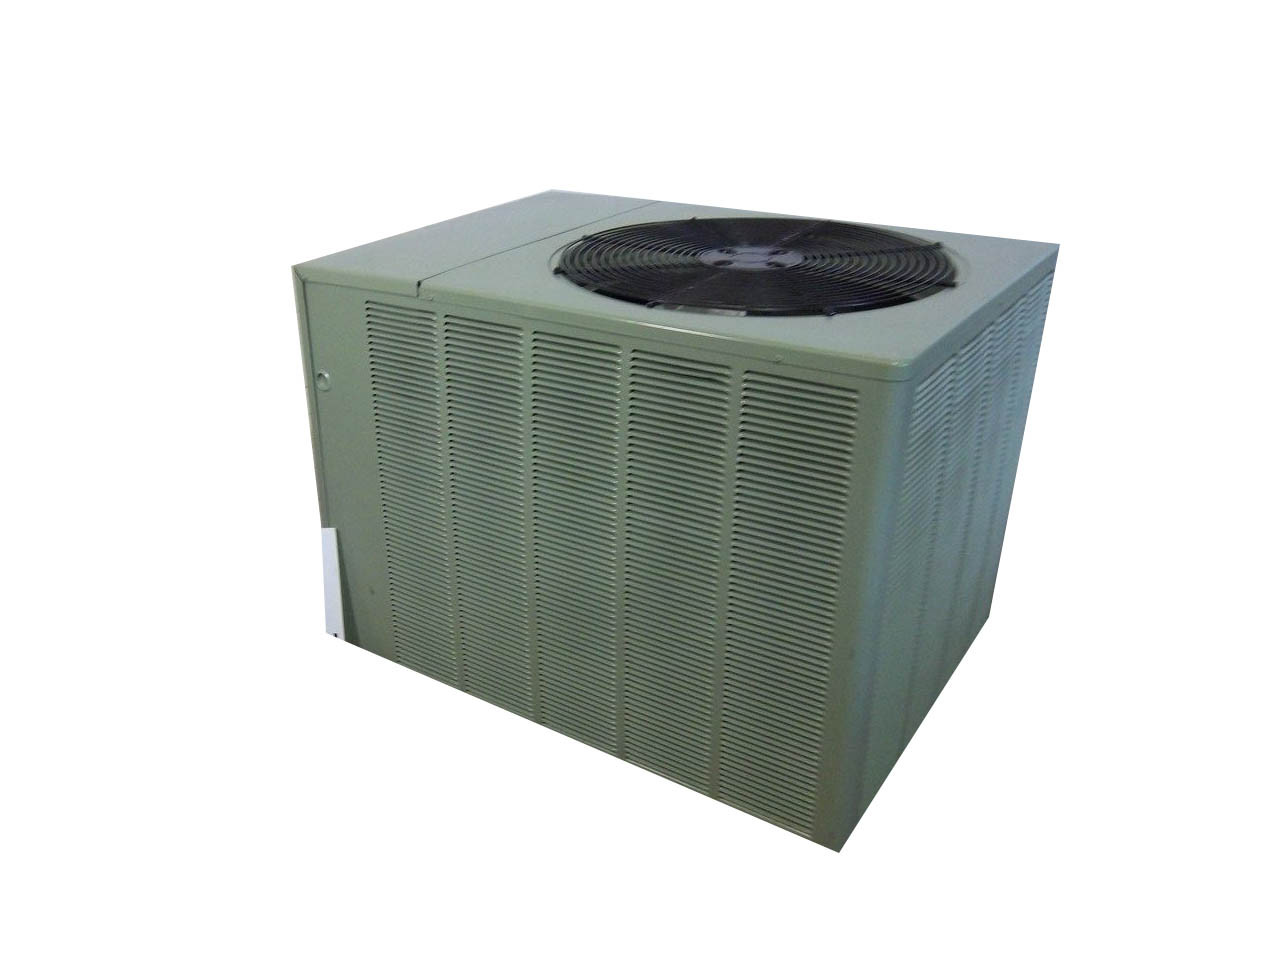 Used AC Depot Refurbished, Certified Condenser RHEEM RANL-048JAZ 1J Rheem Air Conditioner Model Raka 048jaz